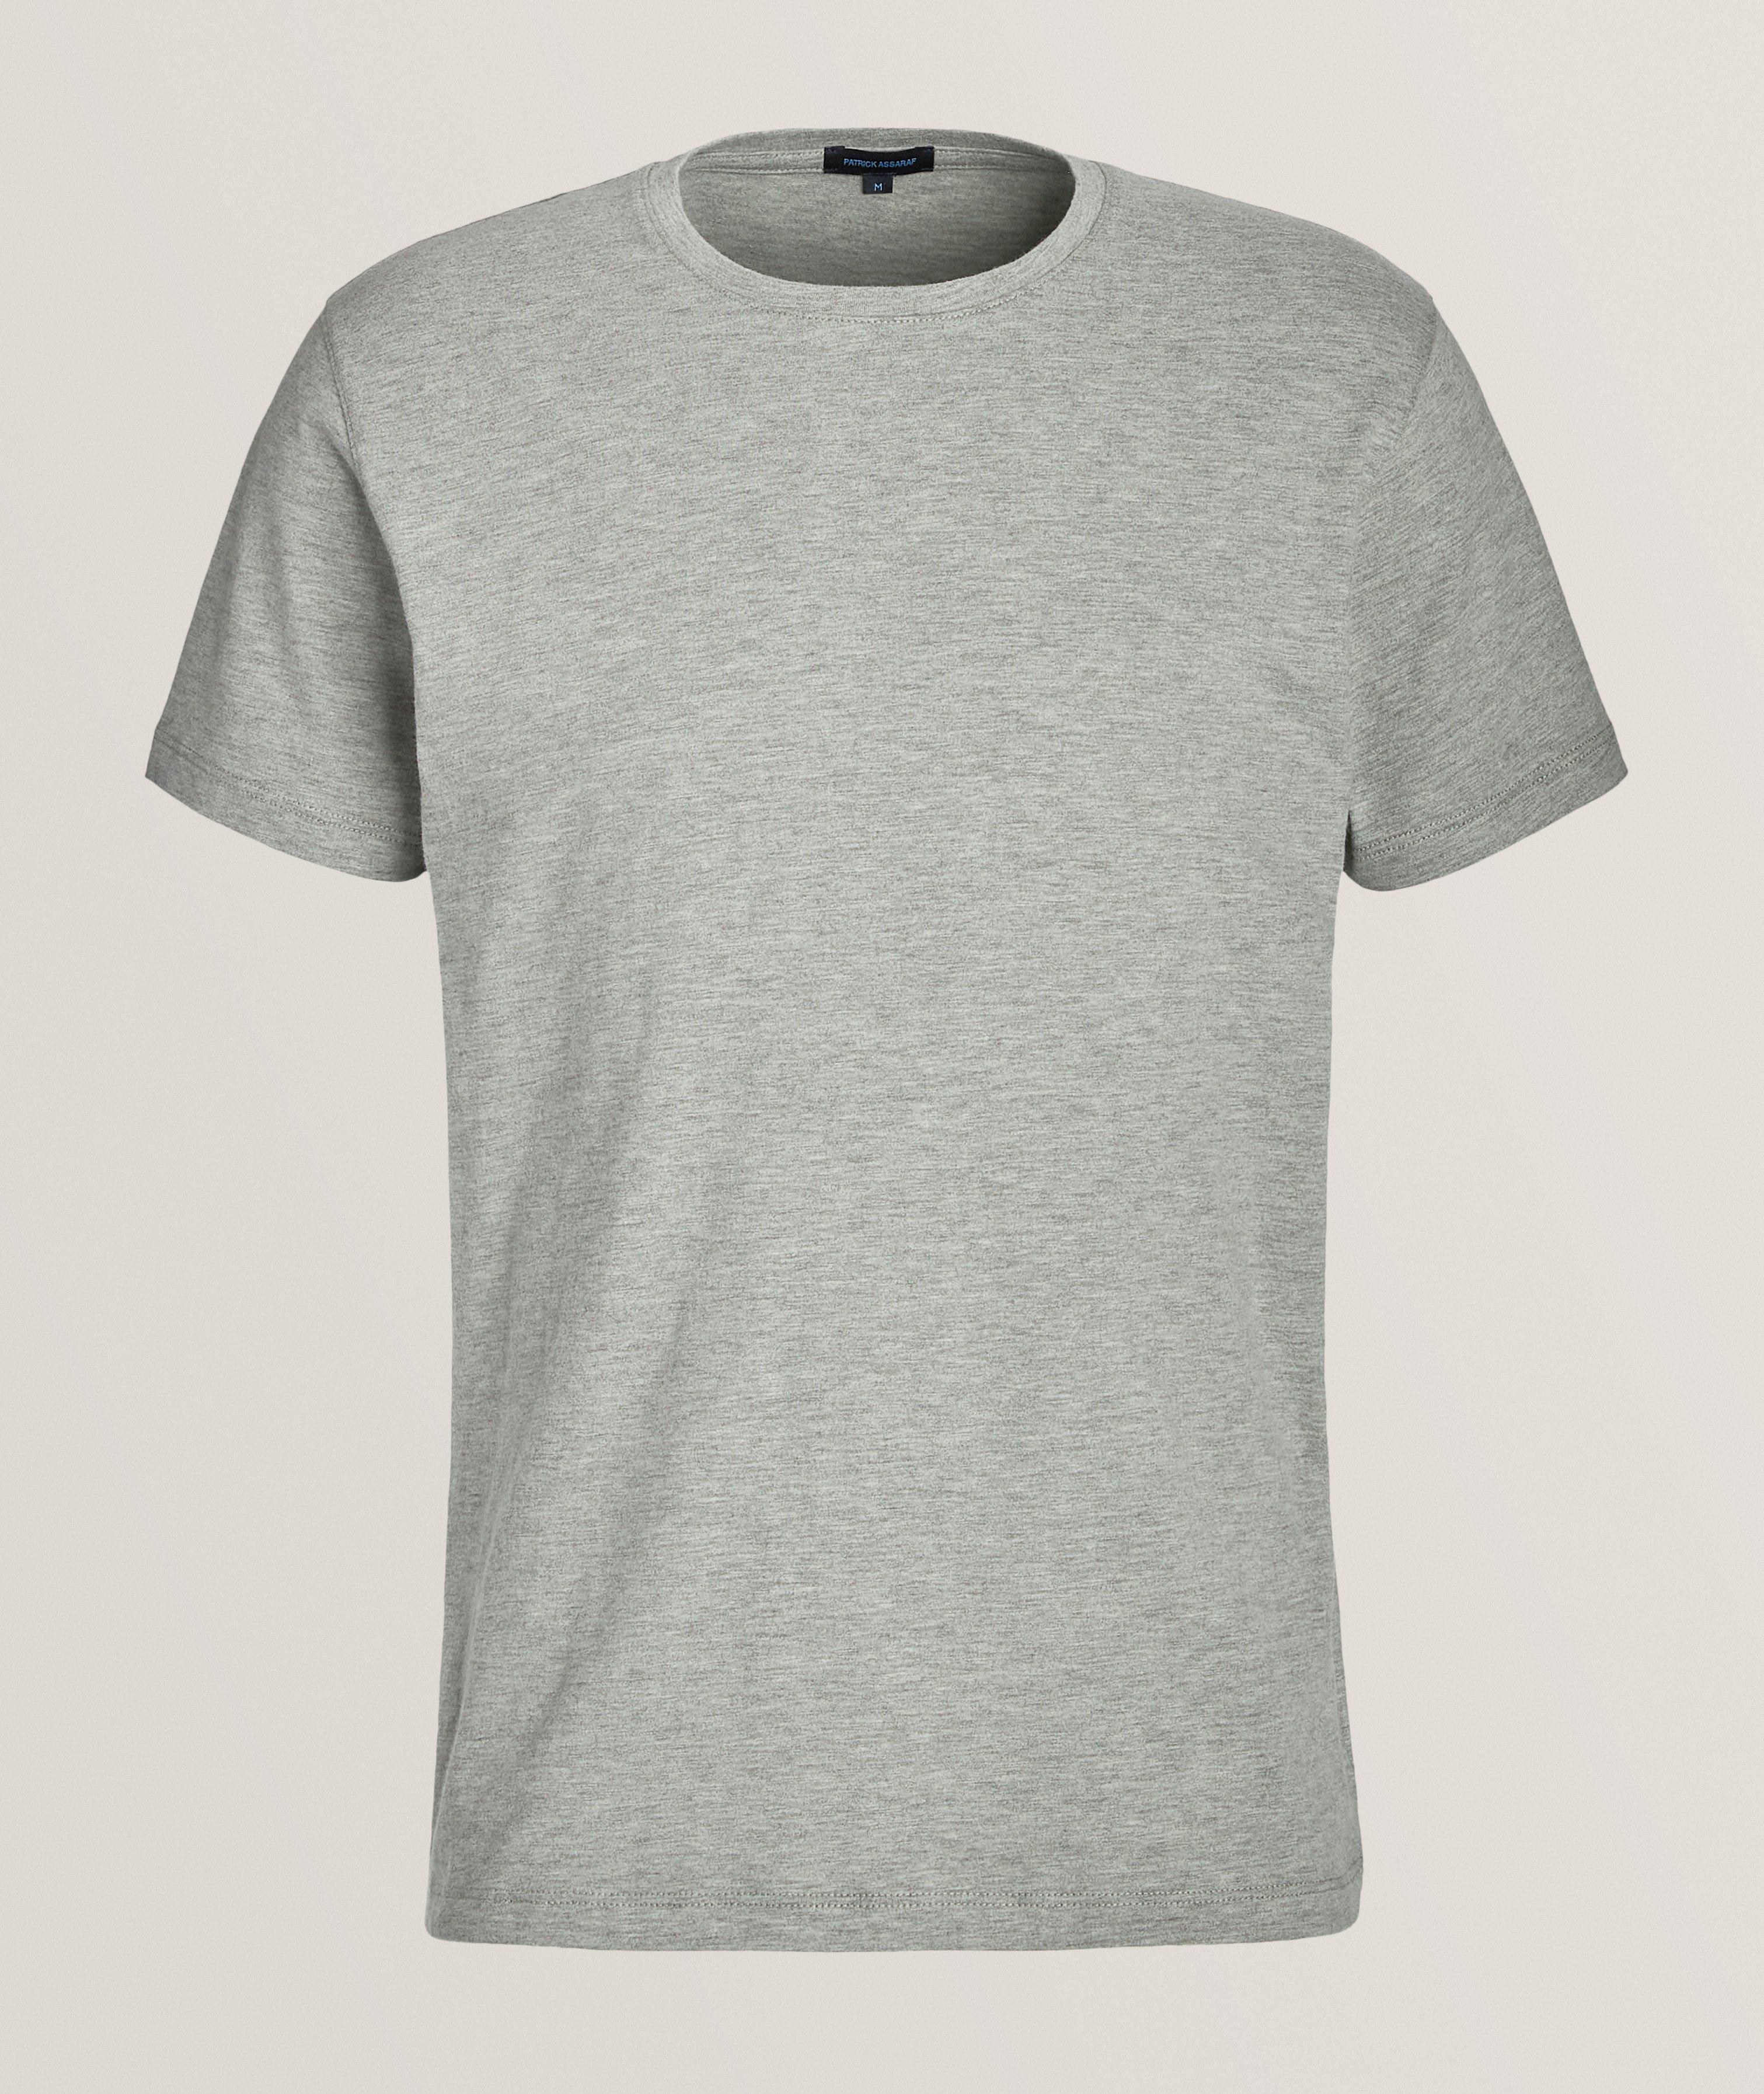 Overdye Heathered Pima Cotton-Blend T-Shirt image 0